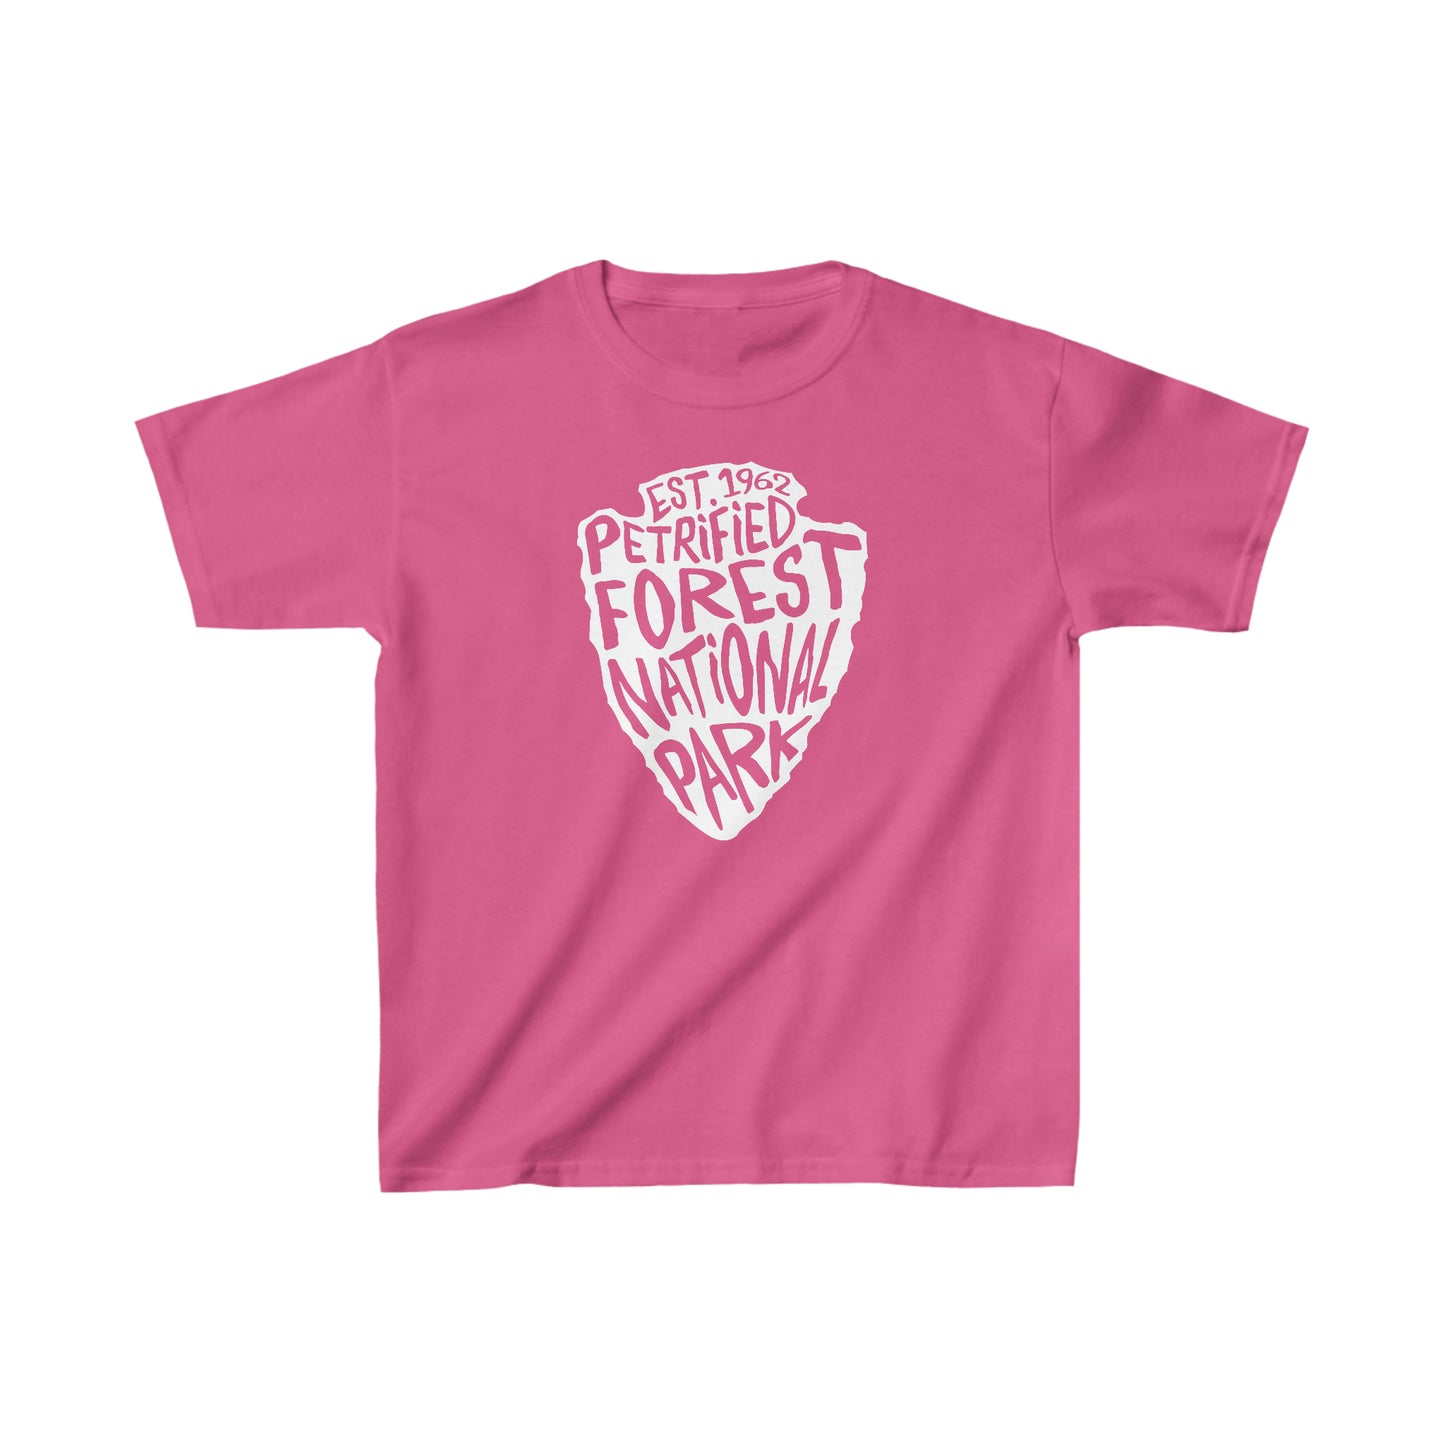 Petrified Forest National Park Child T-Shirt - Arrowhead Design